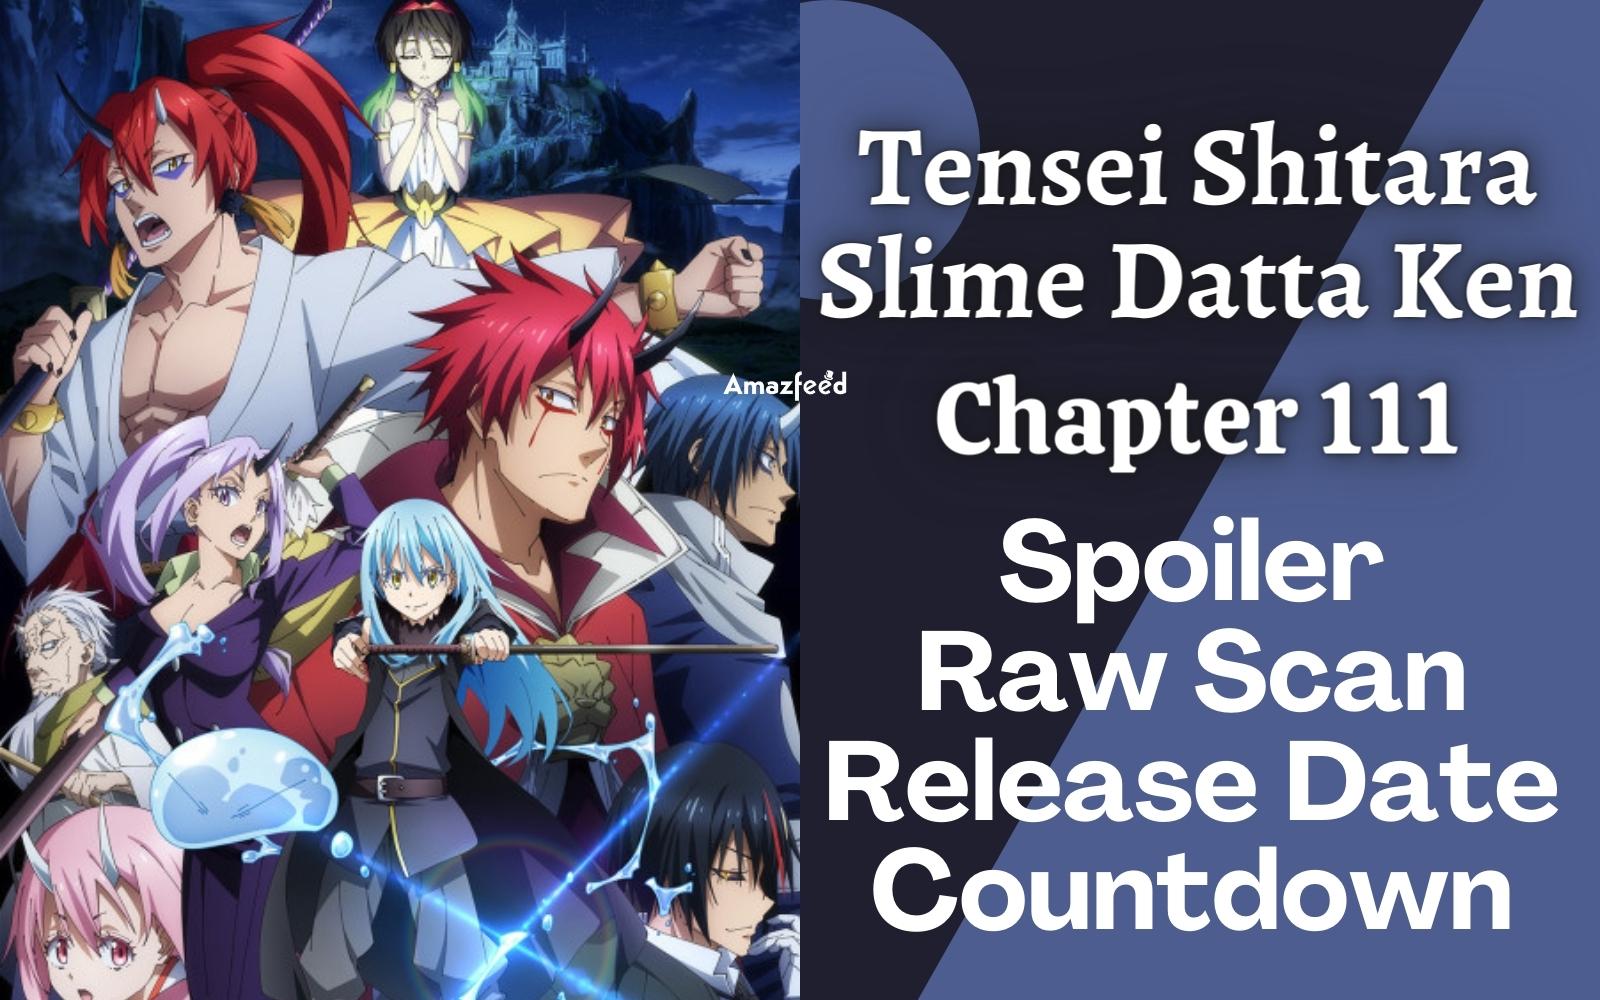 Tensei Shitara Slime Datta Ken Chapter 111: Tournament - Finals